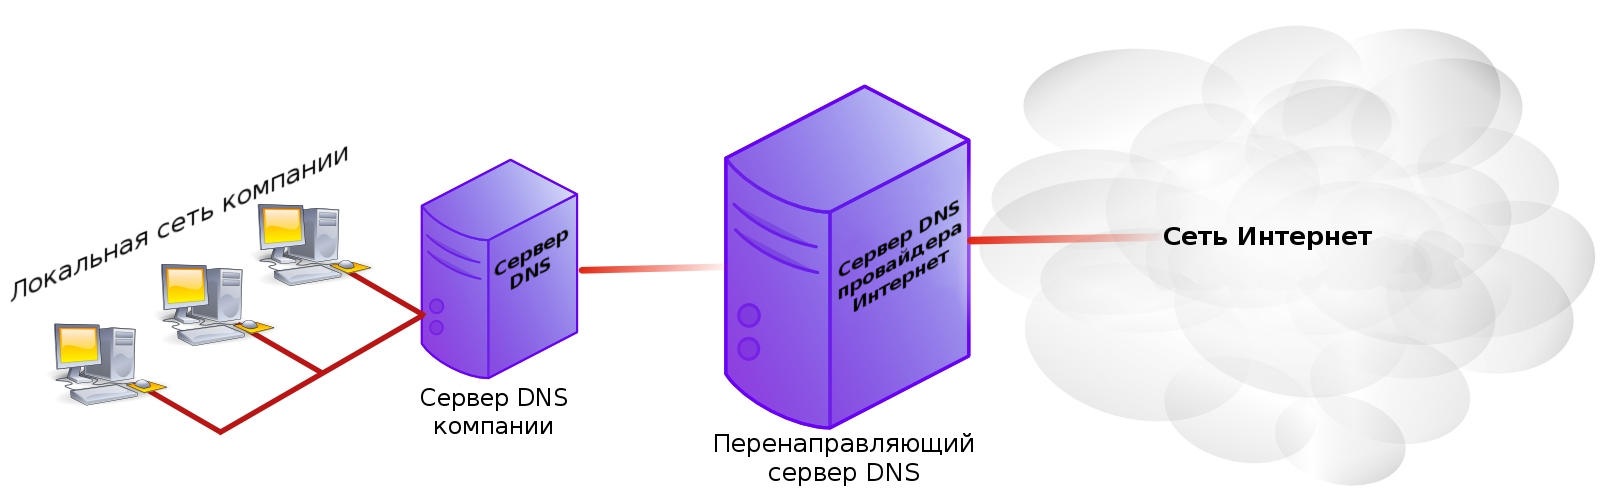 Кэширующий сервер DNS, использующий перенаправляющий сервер